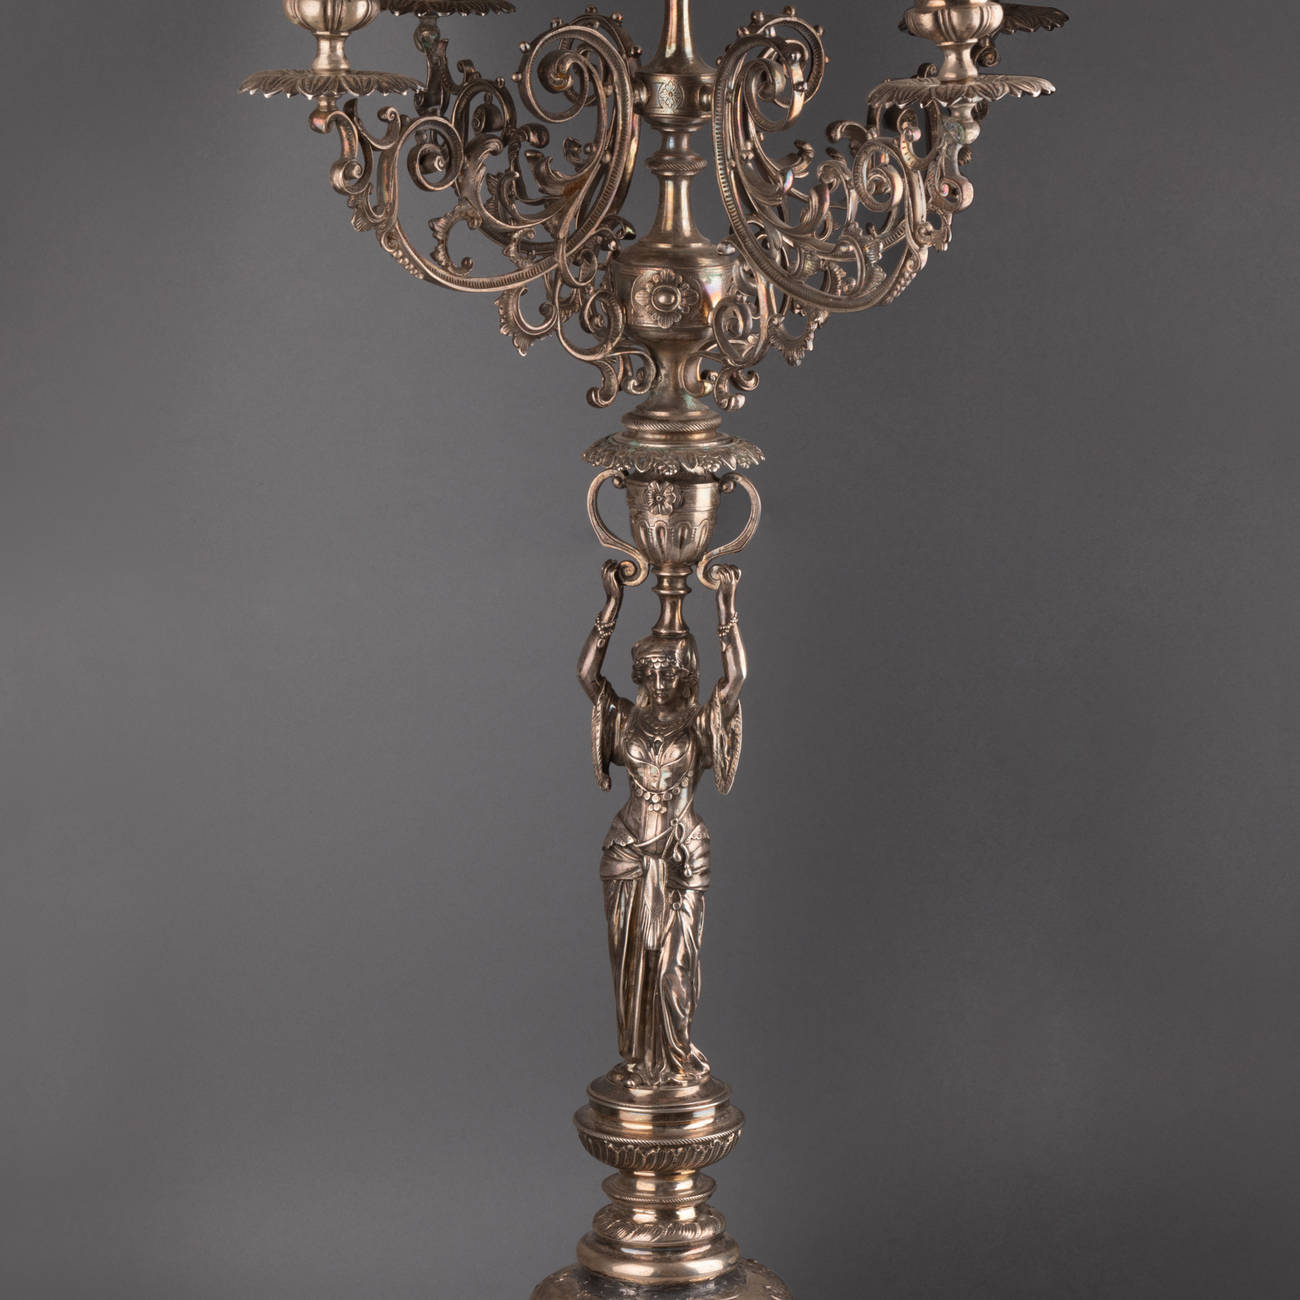 Grand chandelier en argent massif, XIXe siècle